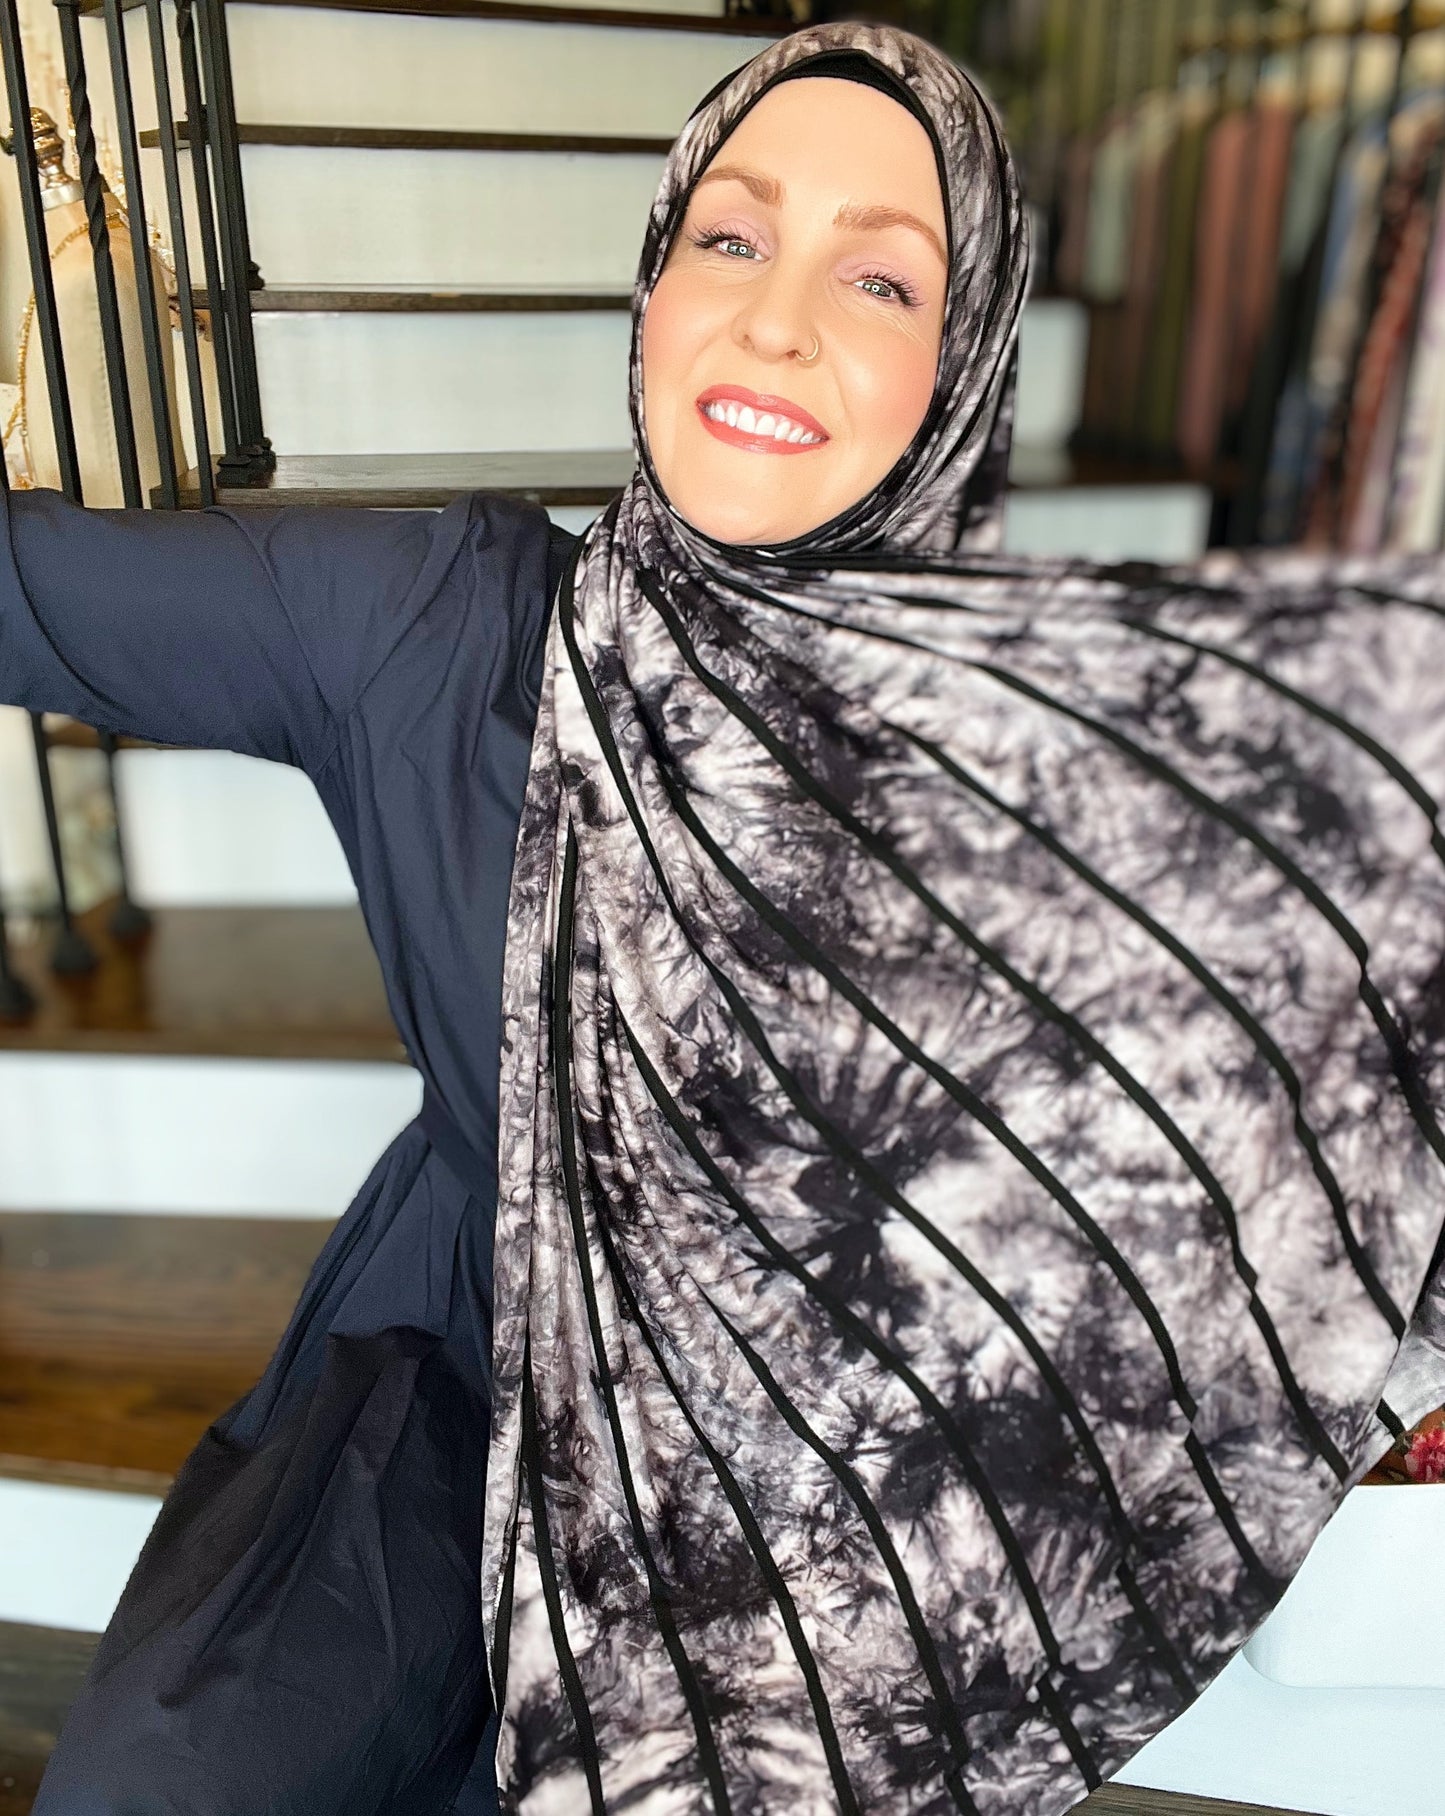 Tie Dye Jersey Hijab: Spicy Black Chai